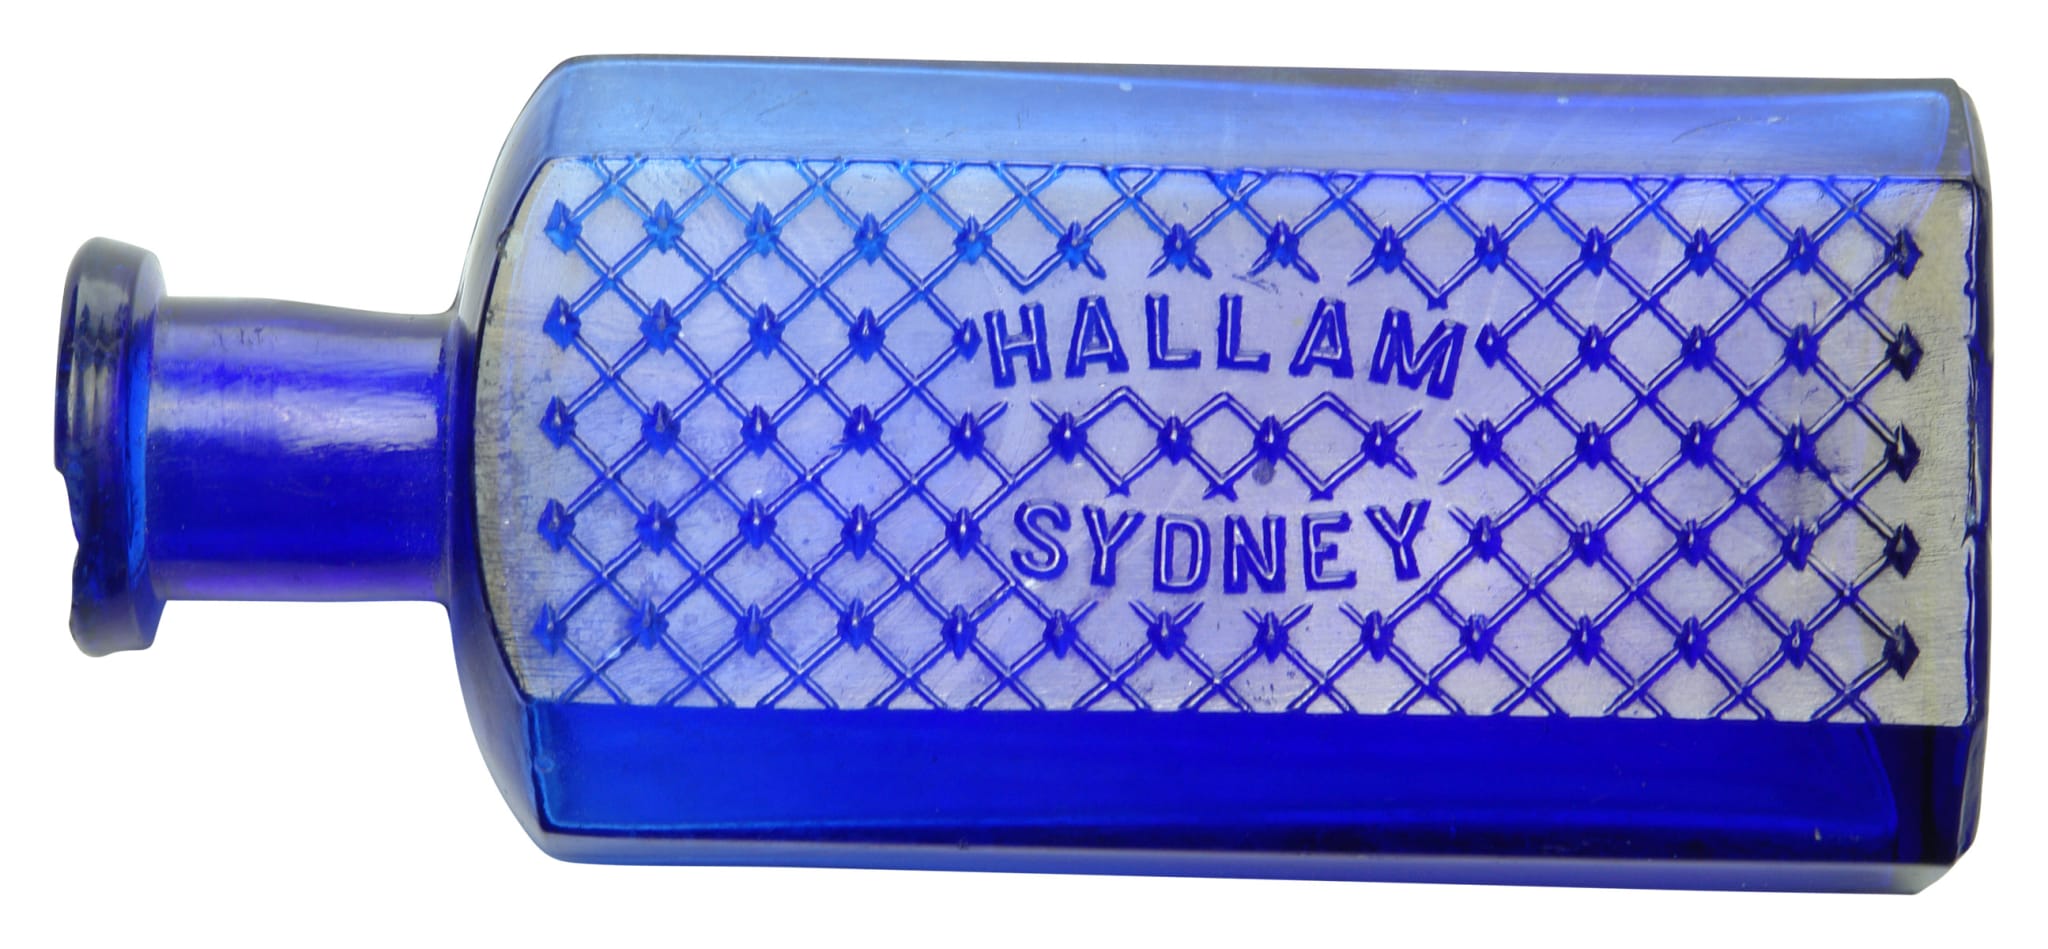 Hallam Sydney Cobalt Blue Poison Bottle